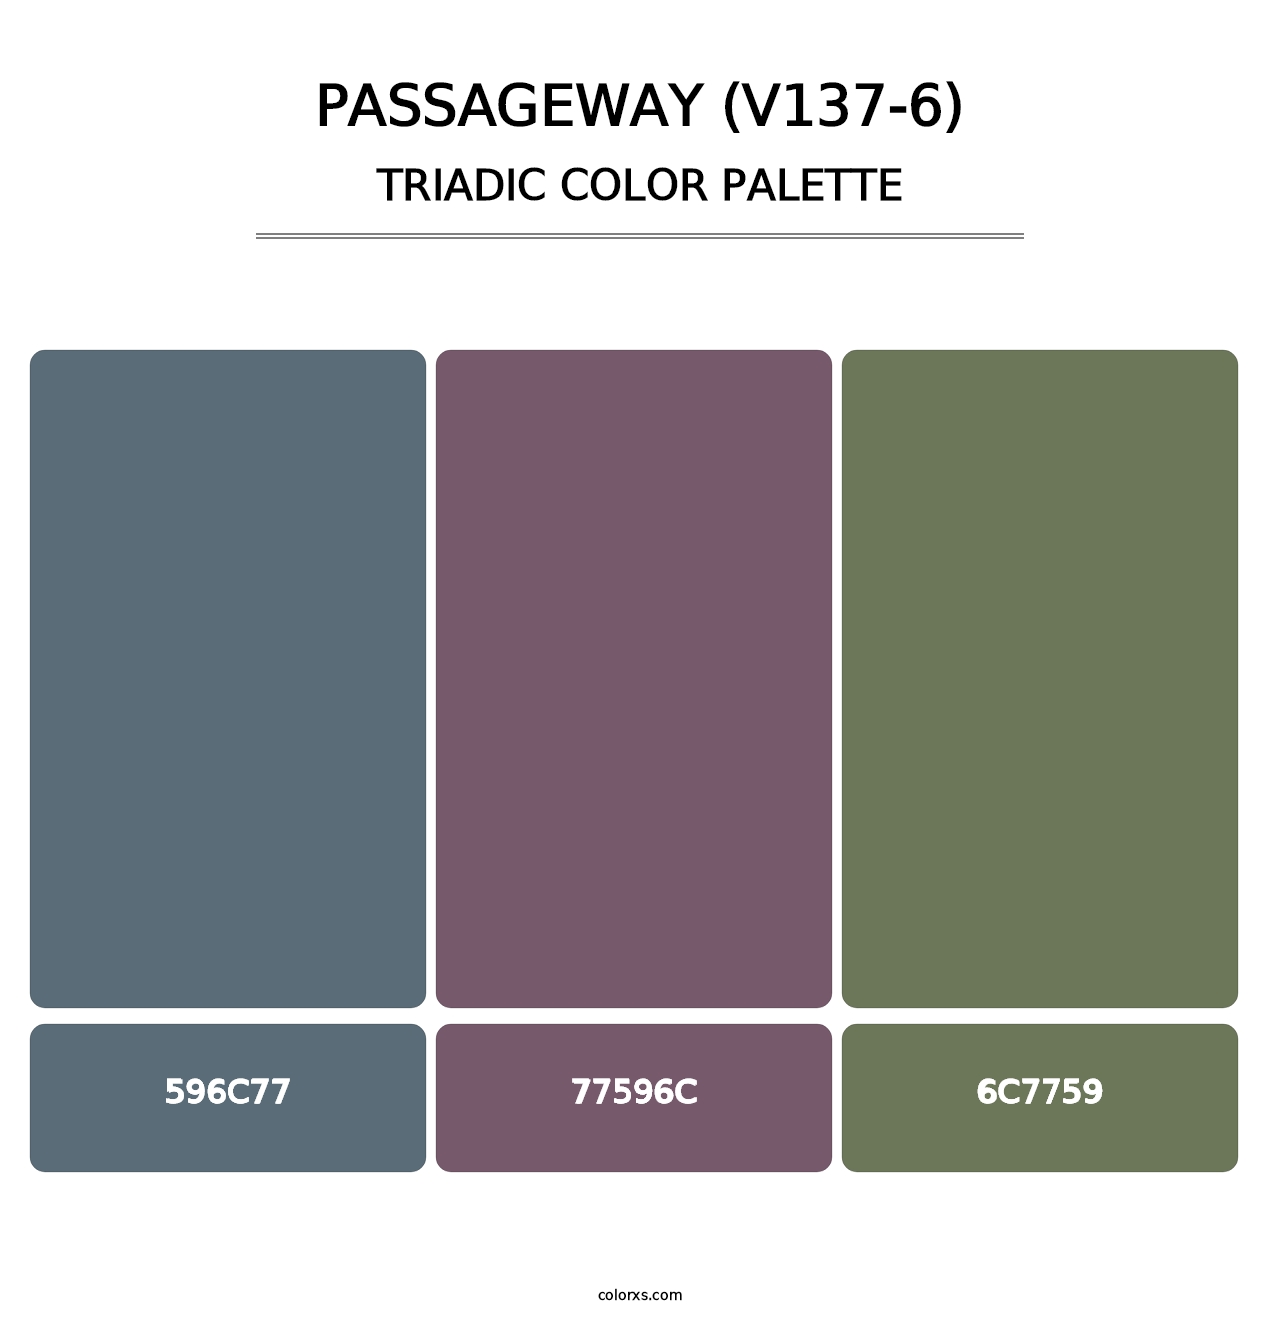 Passageway (V137-6) - Triadic Color Palette